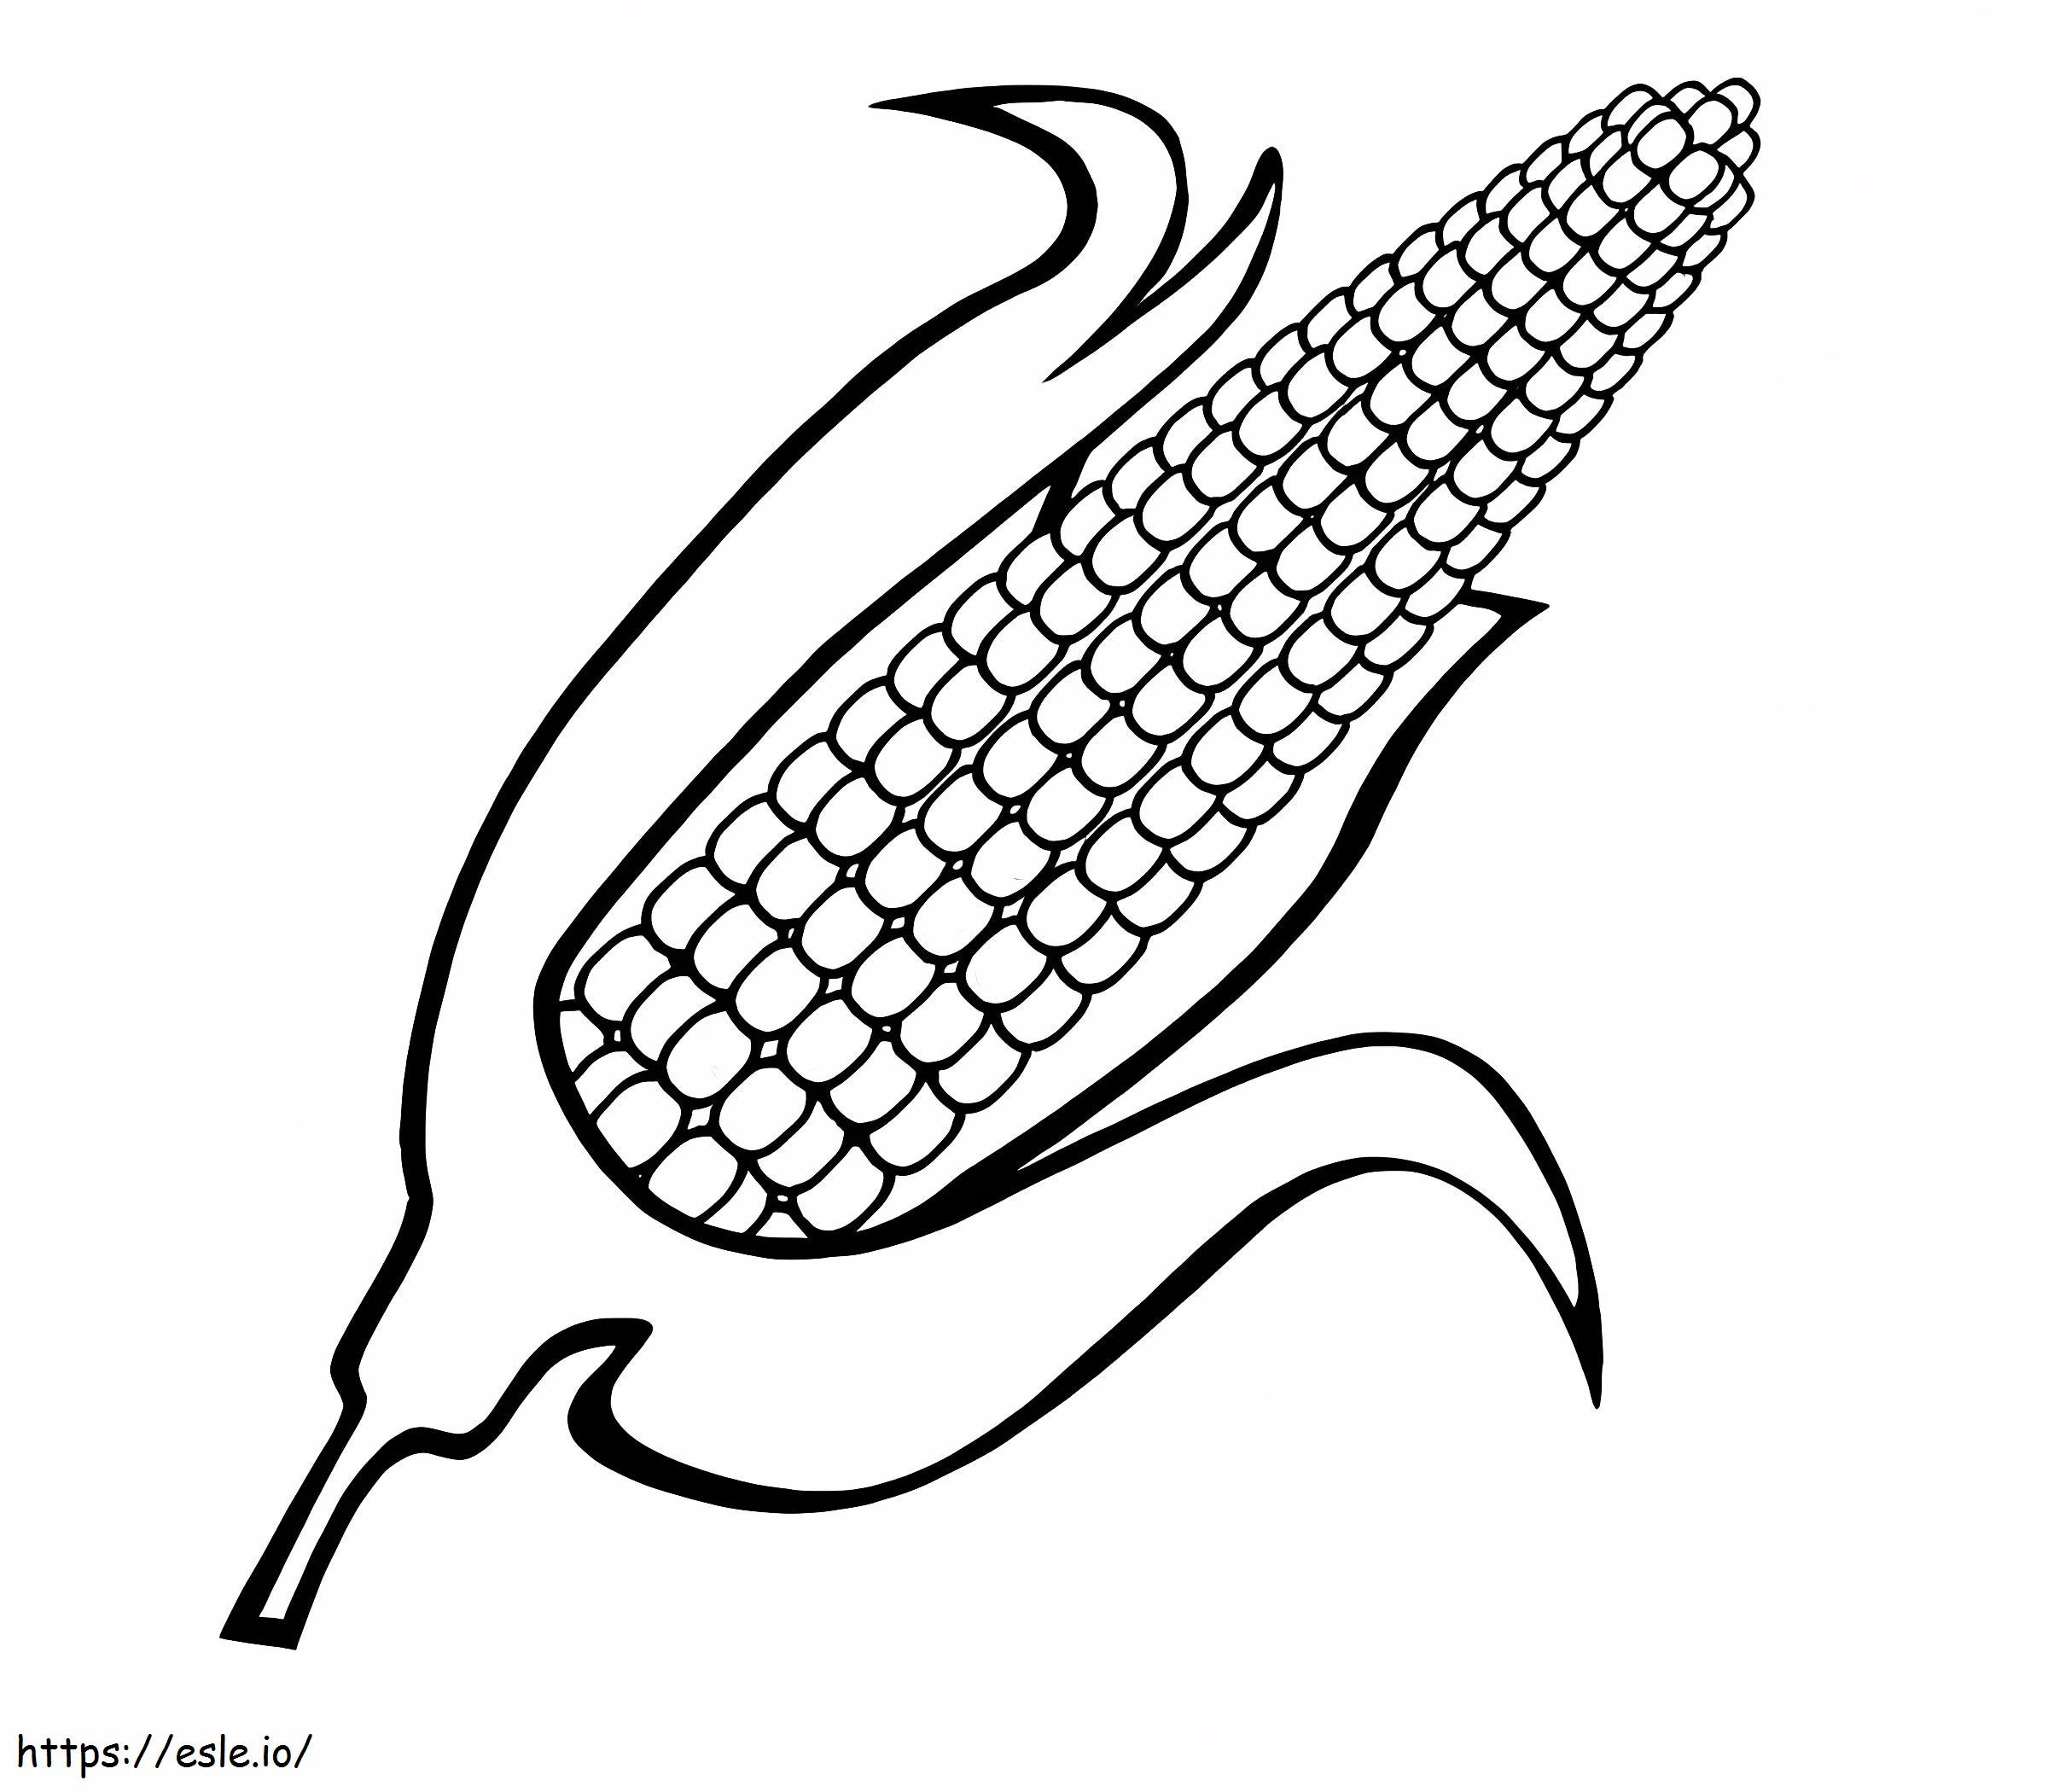 Printable Corn coloring page